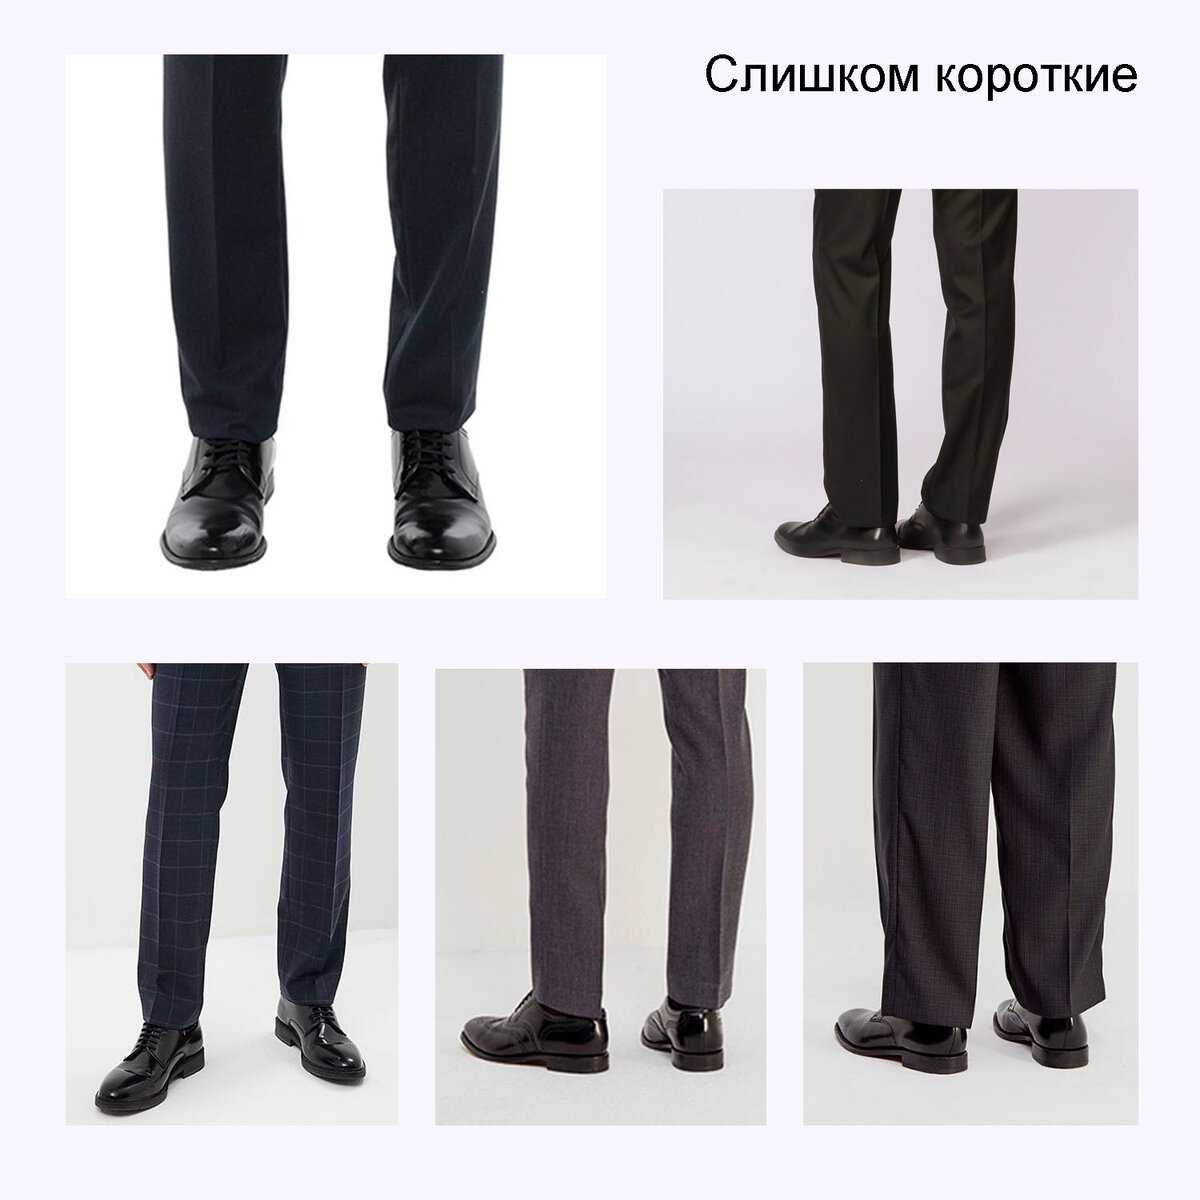 Длина брюк у мужчин | размеры мужских брюк